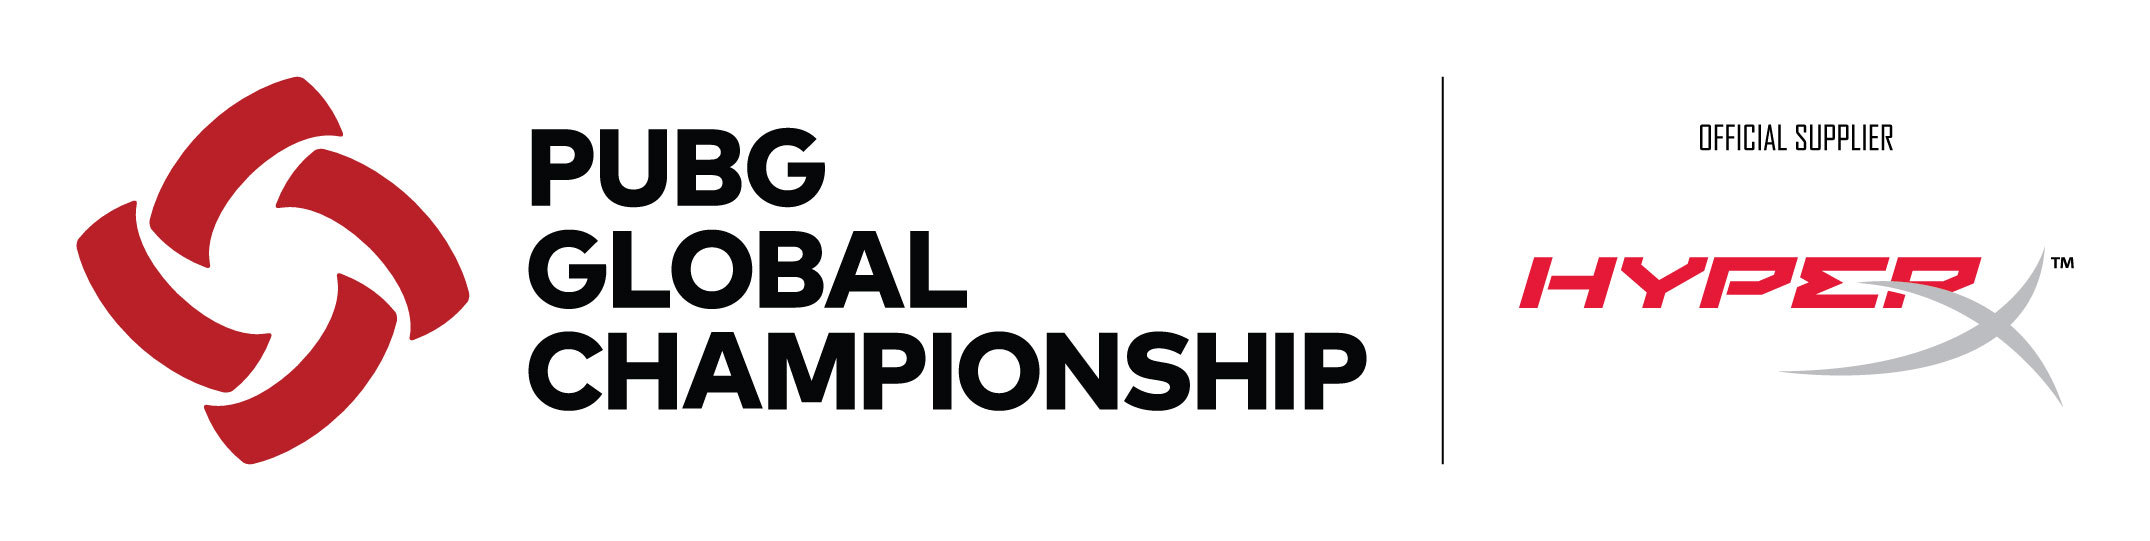 PUBG Global Championship logo